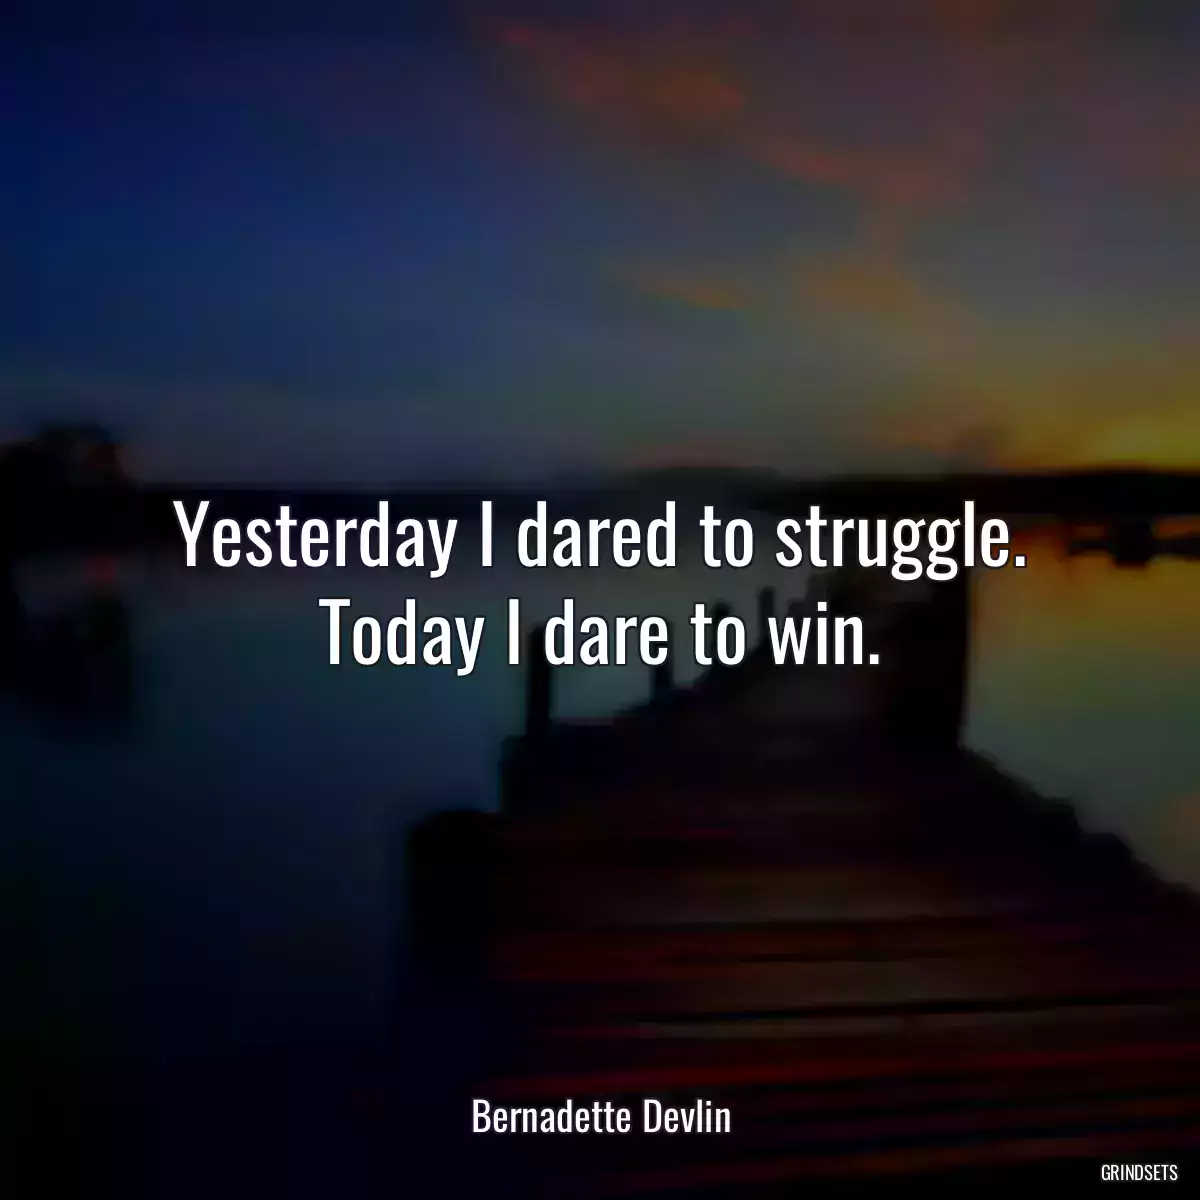 Yesterday I dared to struggle. Today I dare to win.